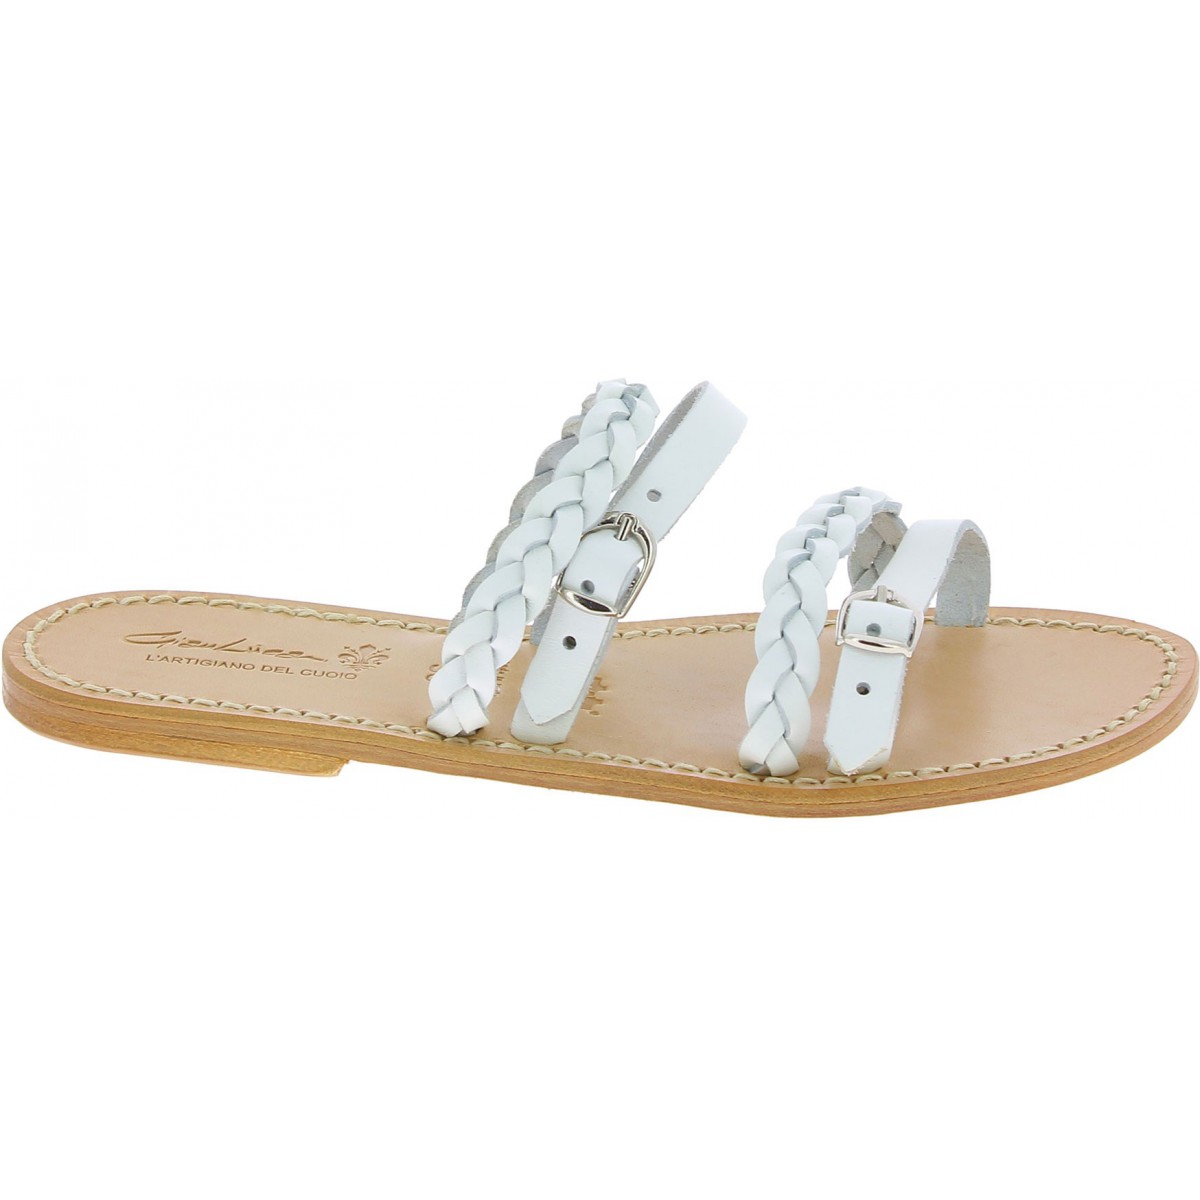 Handmade women's slipper sandals in white leather | The leather craftsmen